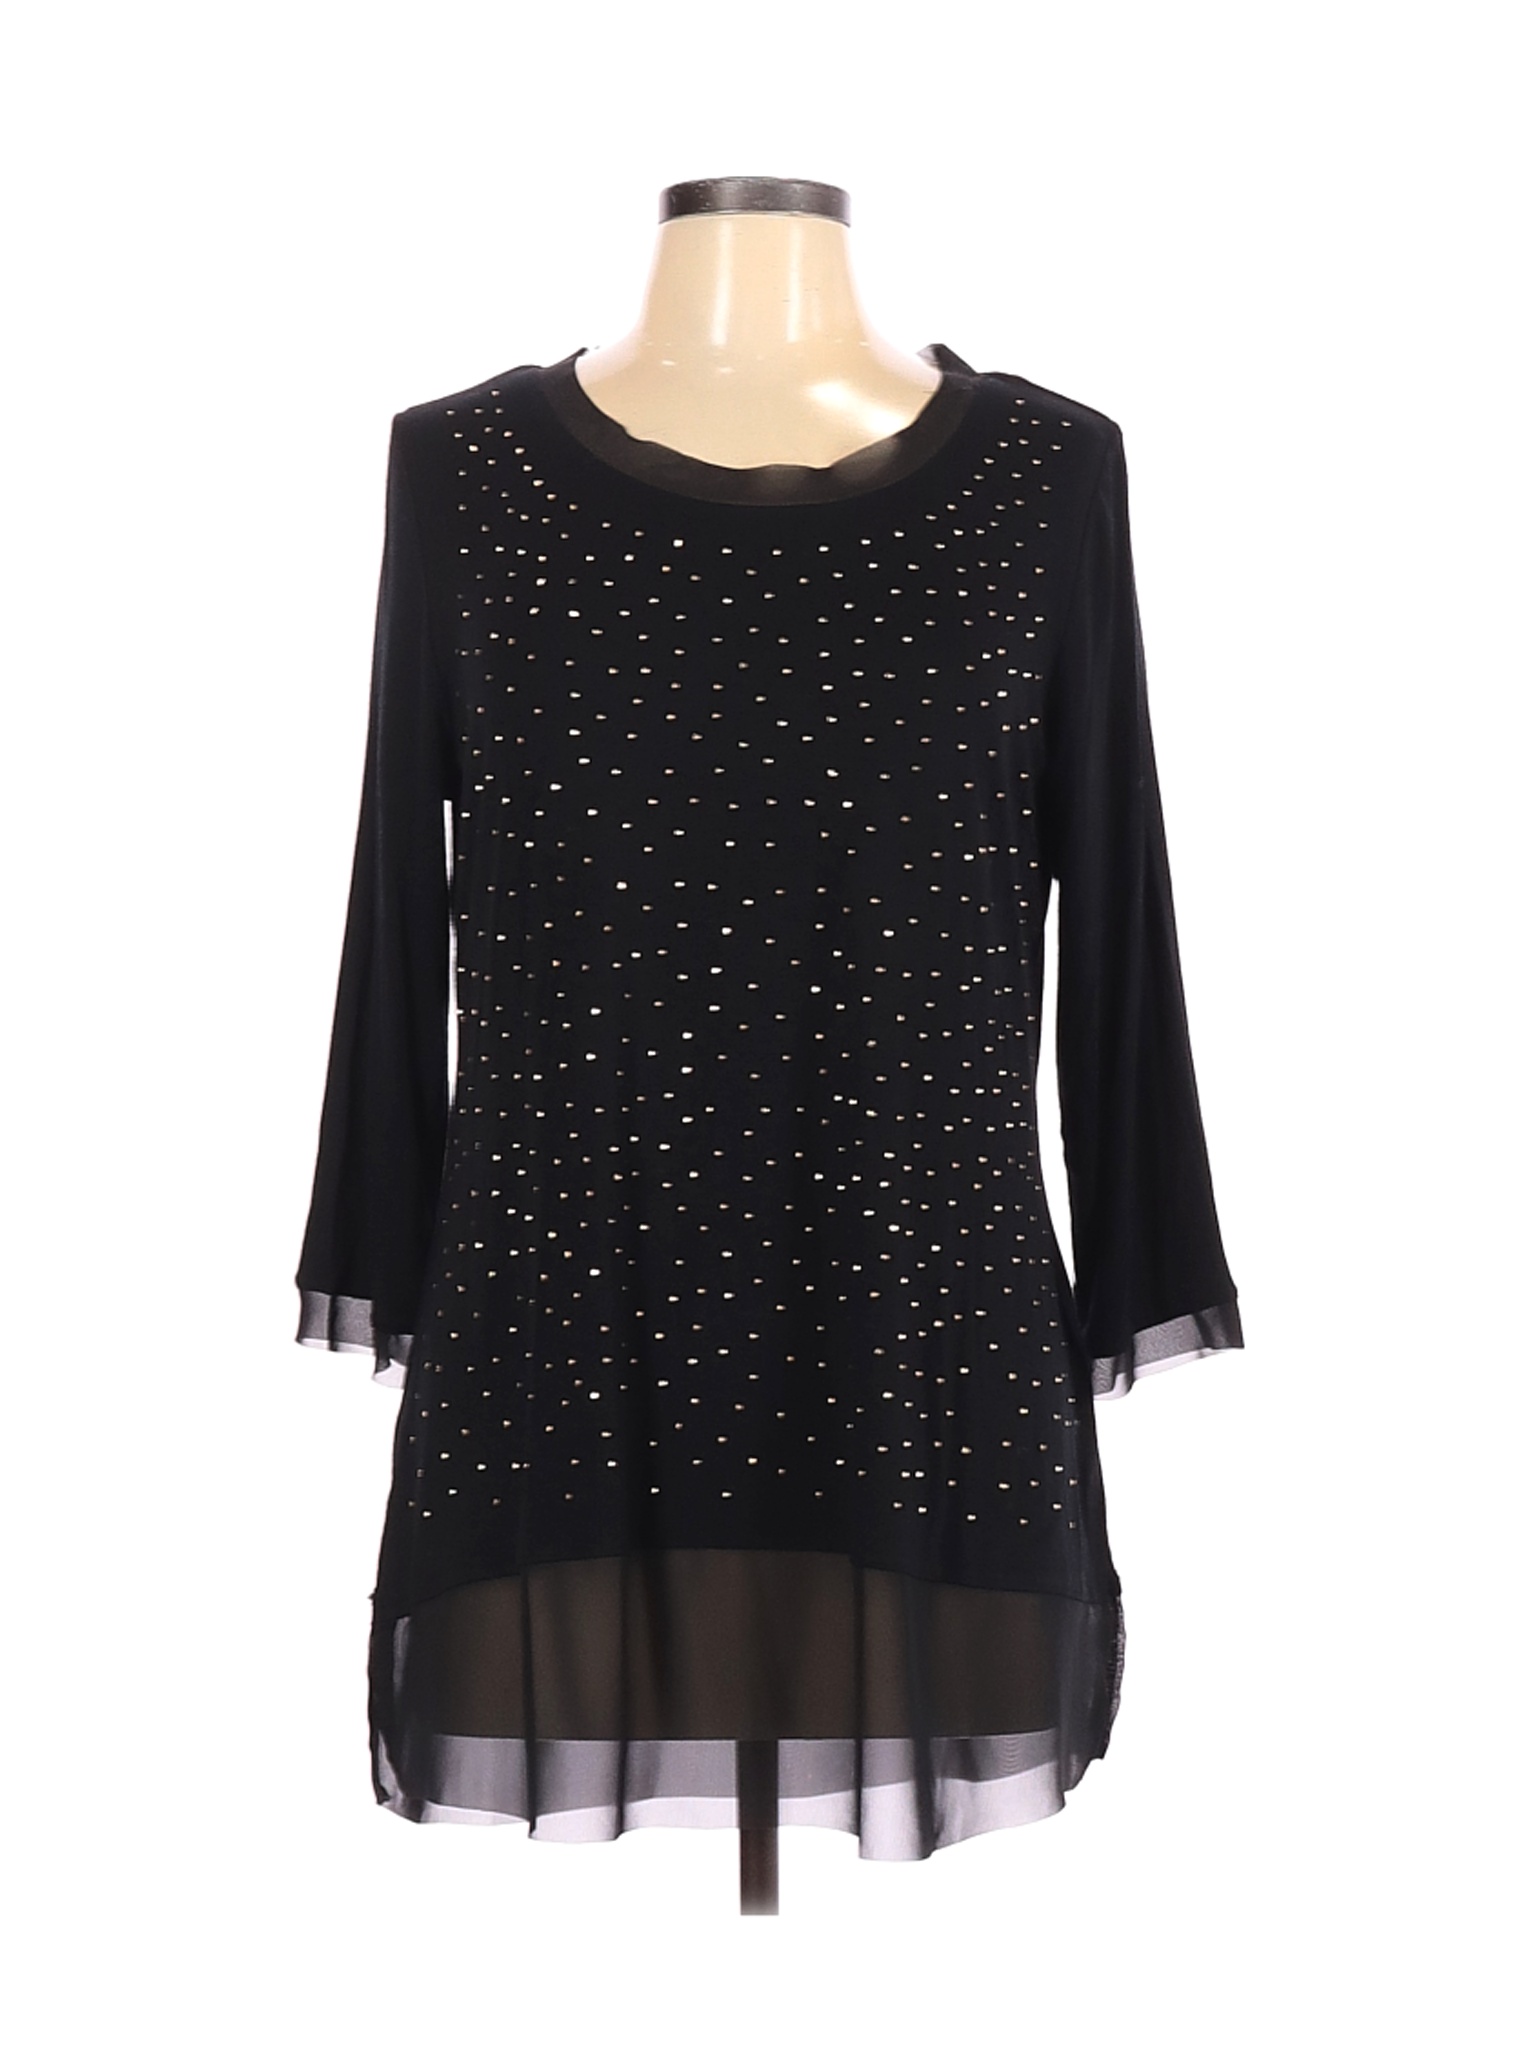 Belldini Women Black 3/4 Sleeve Blouse L | eBay